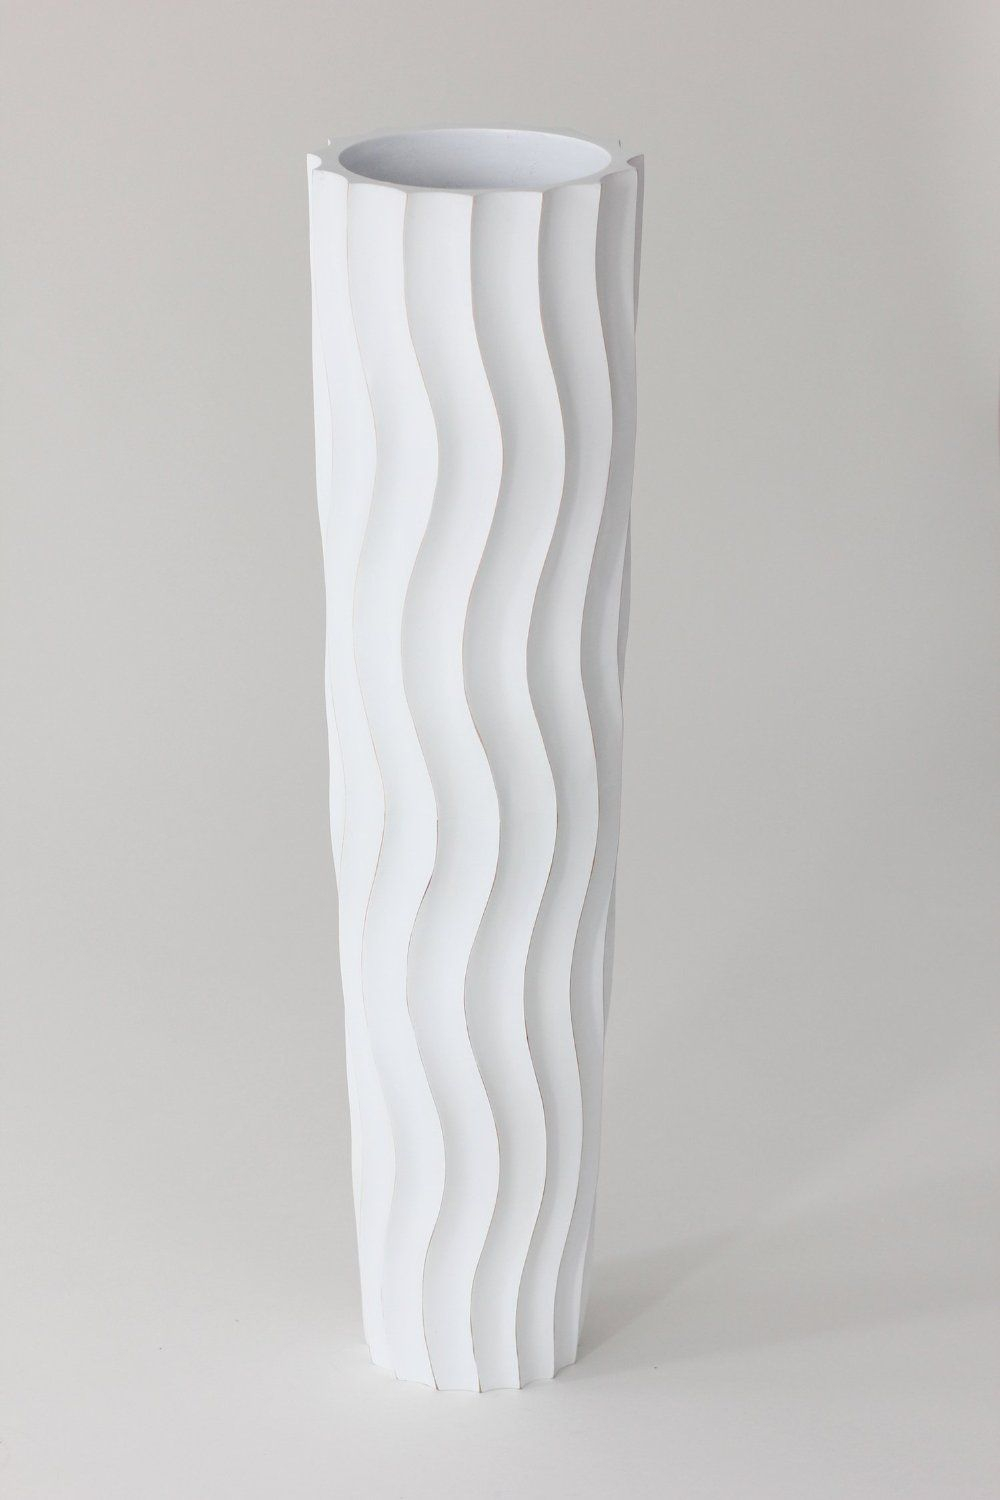 Tall Floor Vase 75 Cm Mango Wood White Amazoncouk within dimensions 1000 X 1500